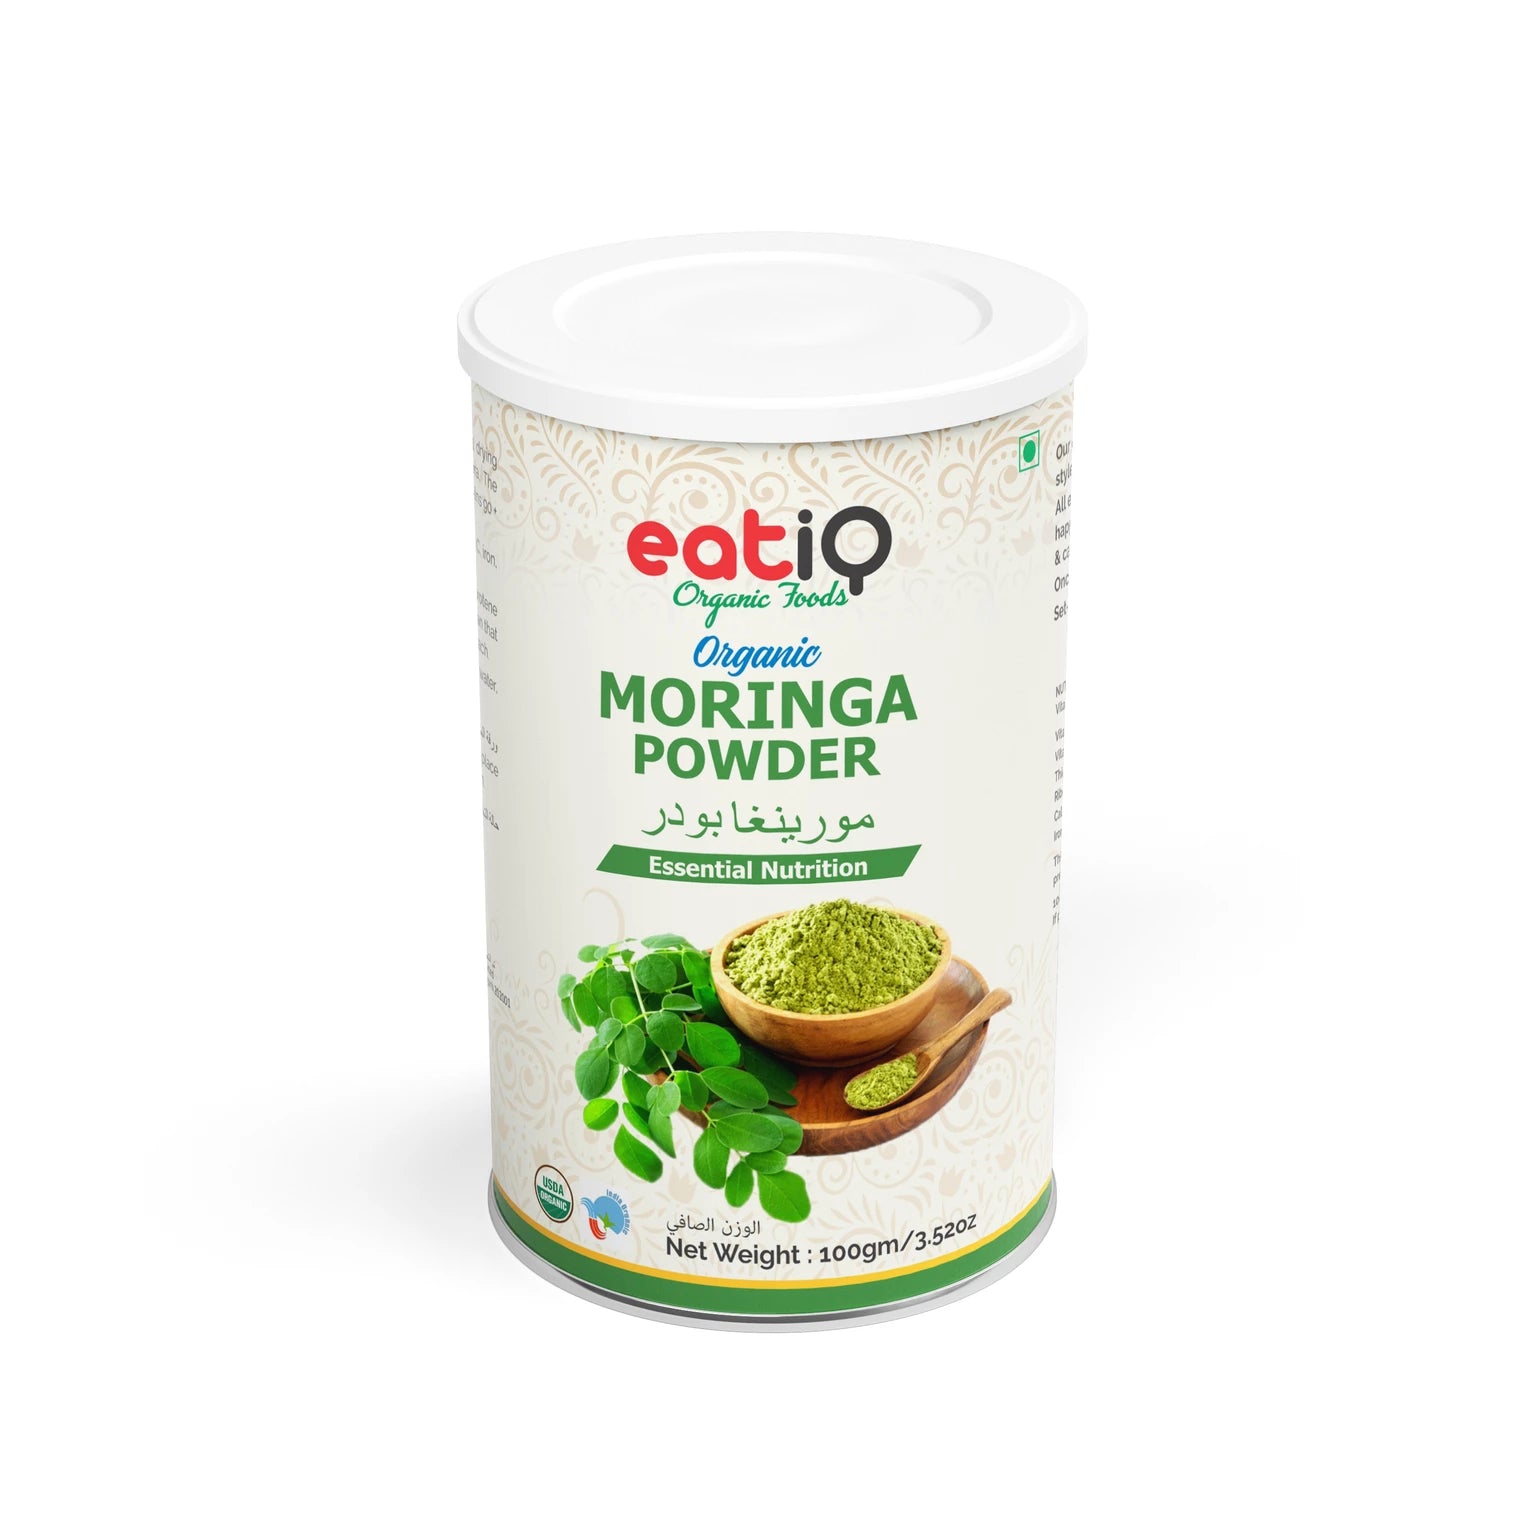 EATIQ ORGANIC FOODS Organic Moringa Powder, 100g